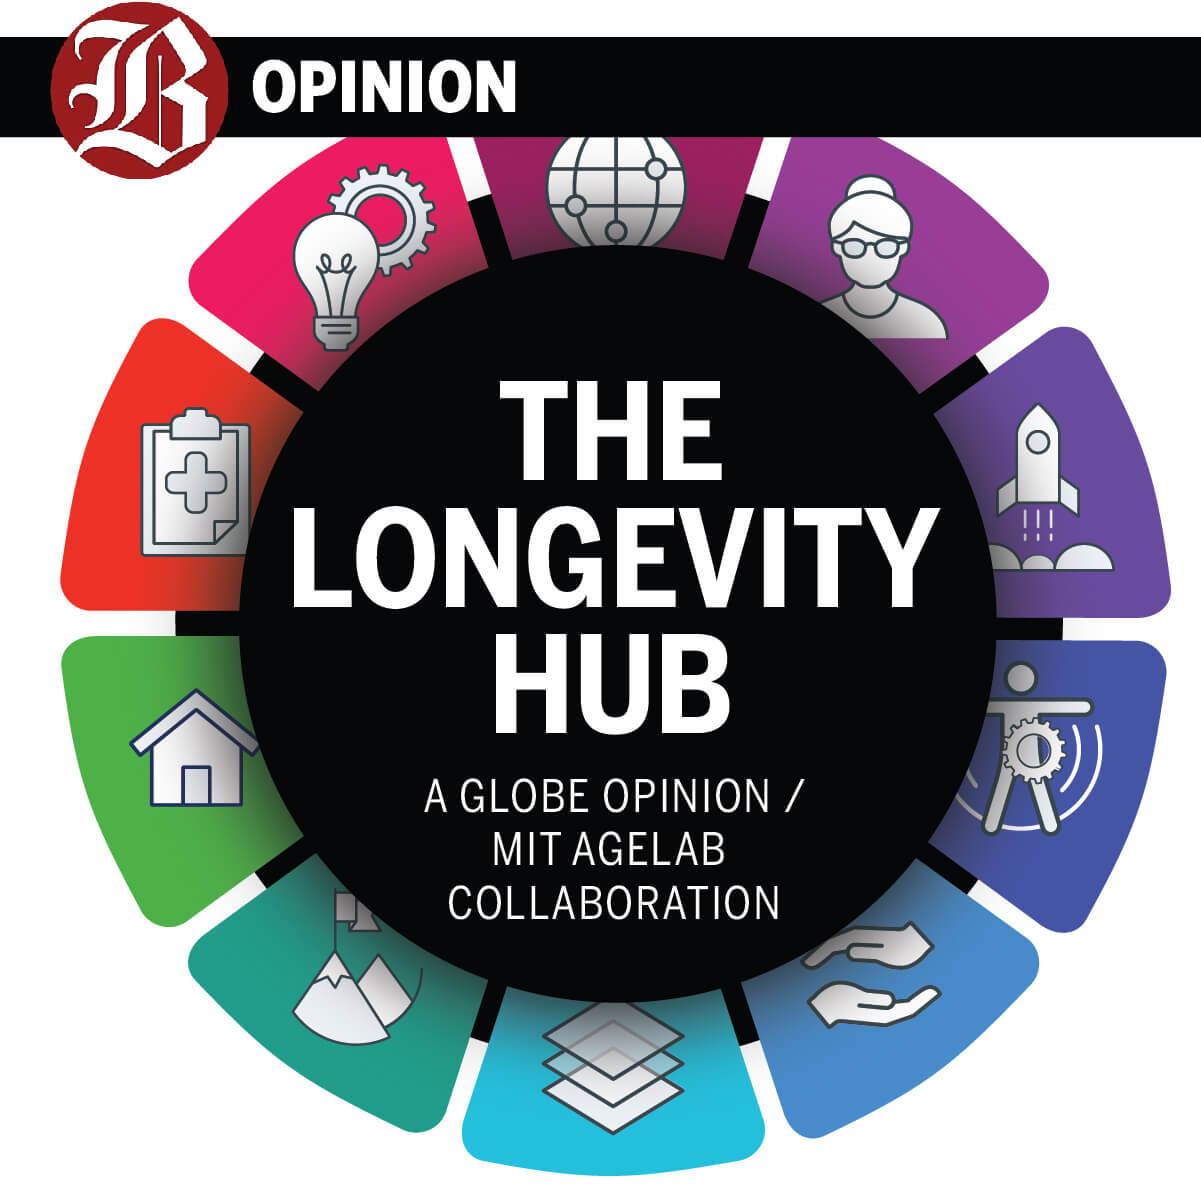 The Longevity Hub